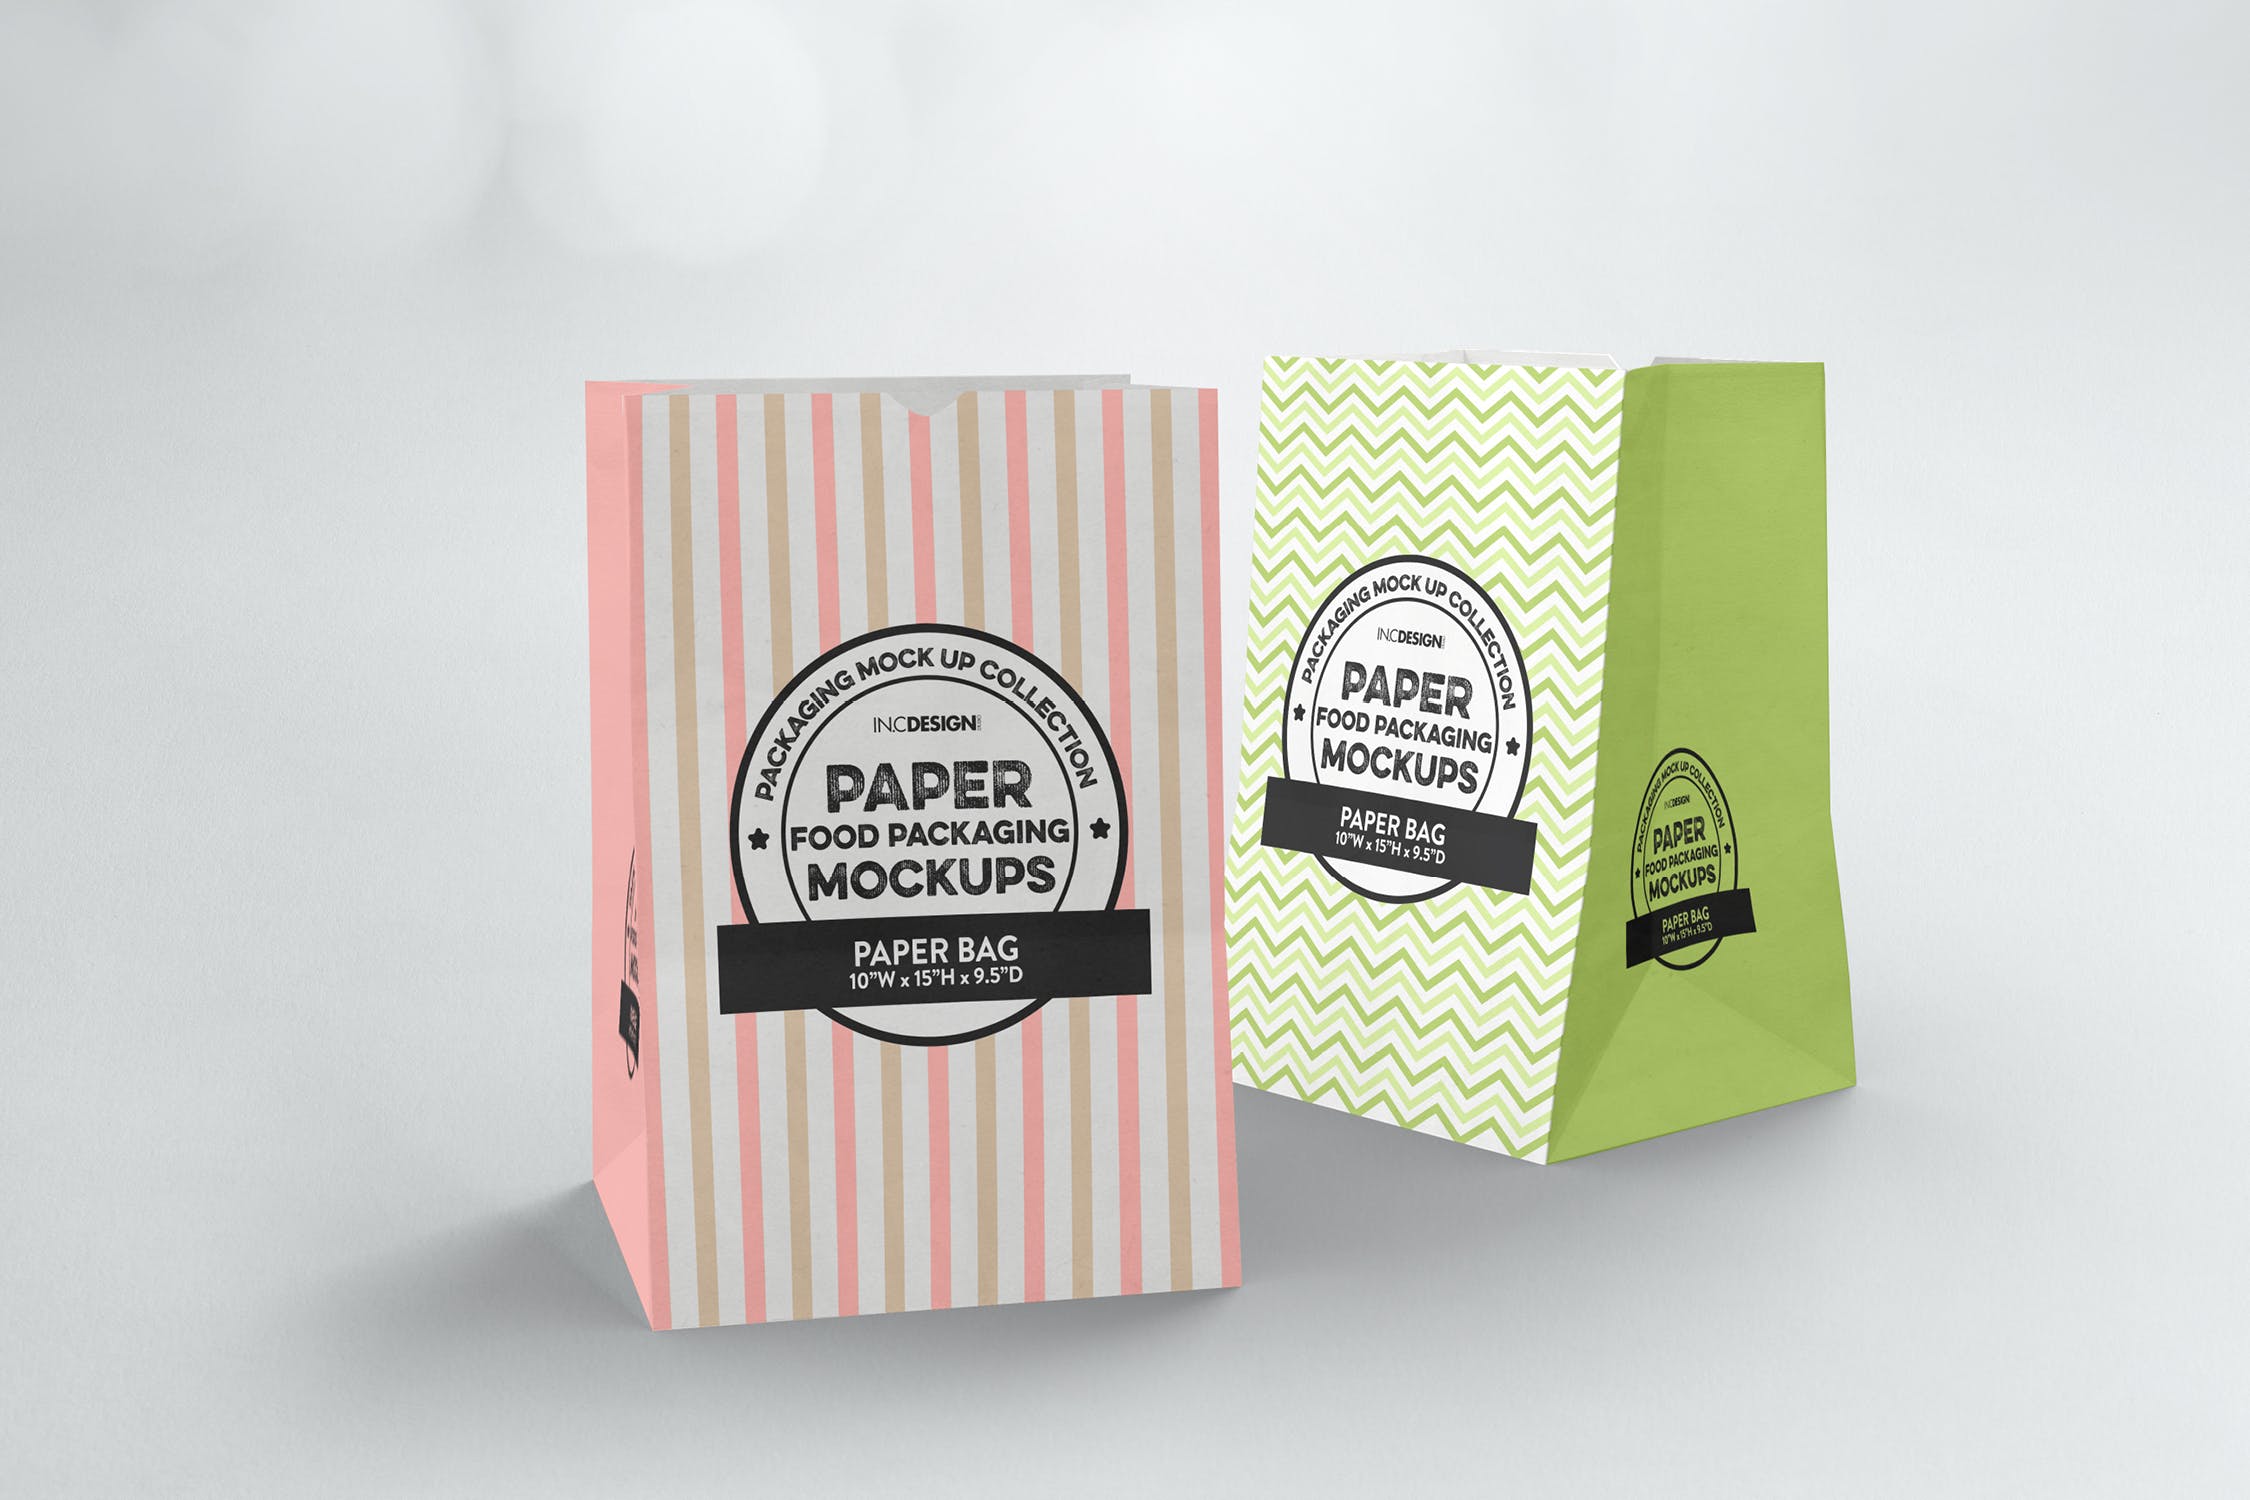 杂货纸袋包装设计效果图第一素材精选 Grocery Paper Bags Packaging Mockup插图(1)